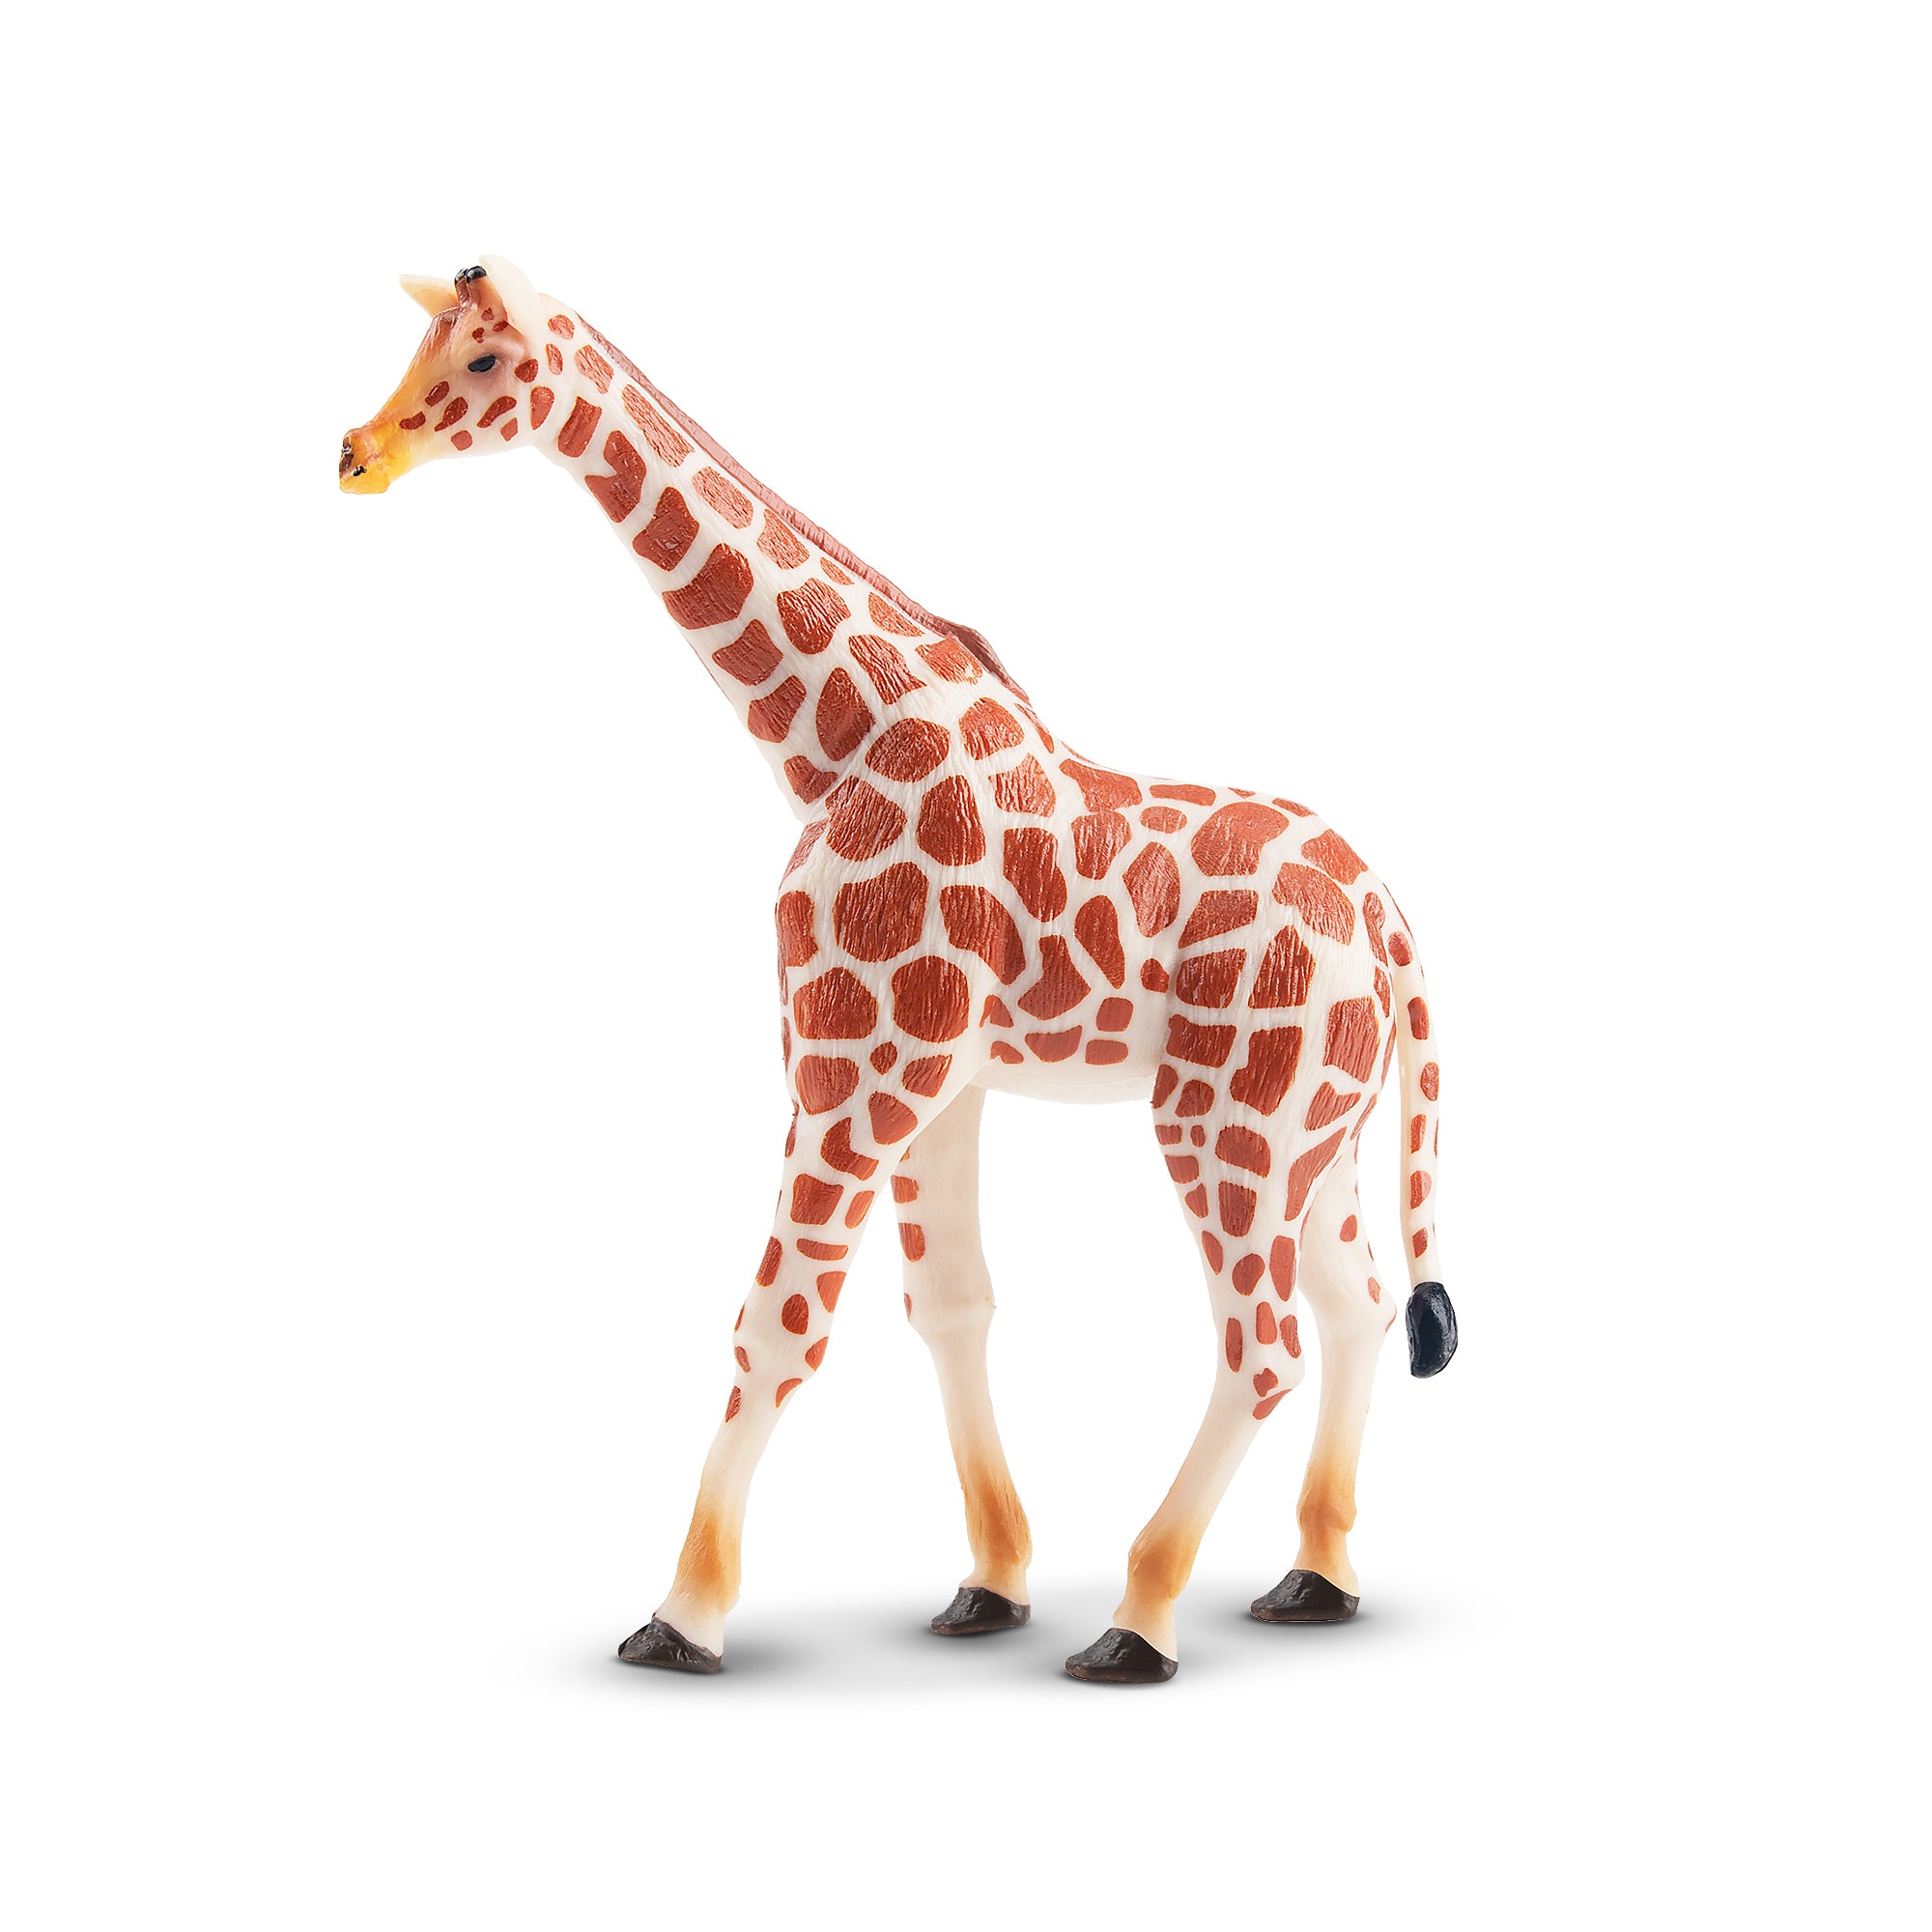 Toymany Standing Giraffe Figurine Toy